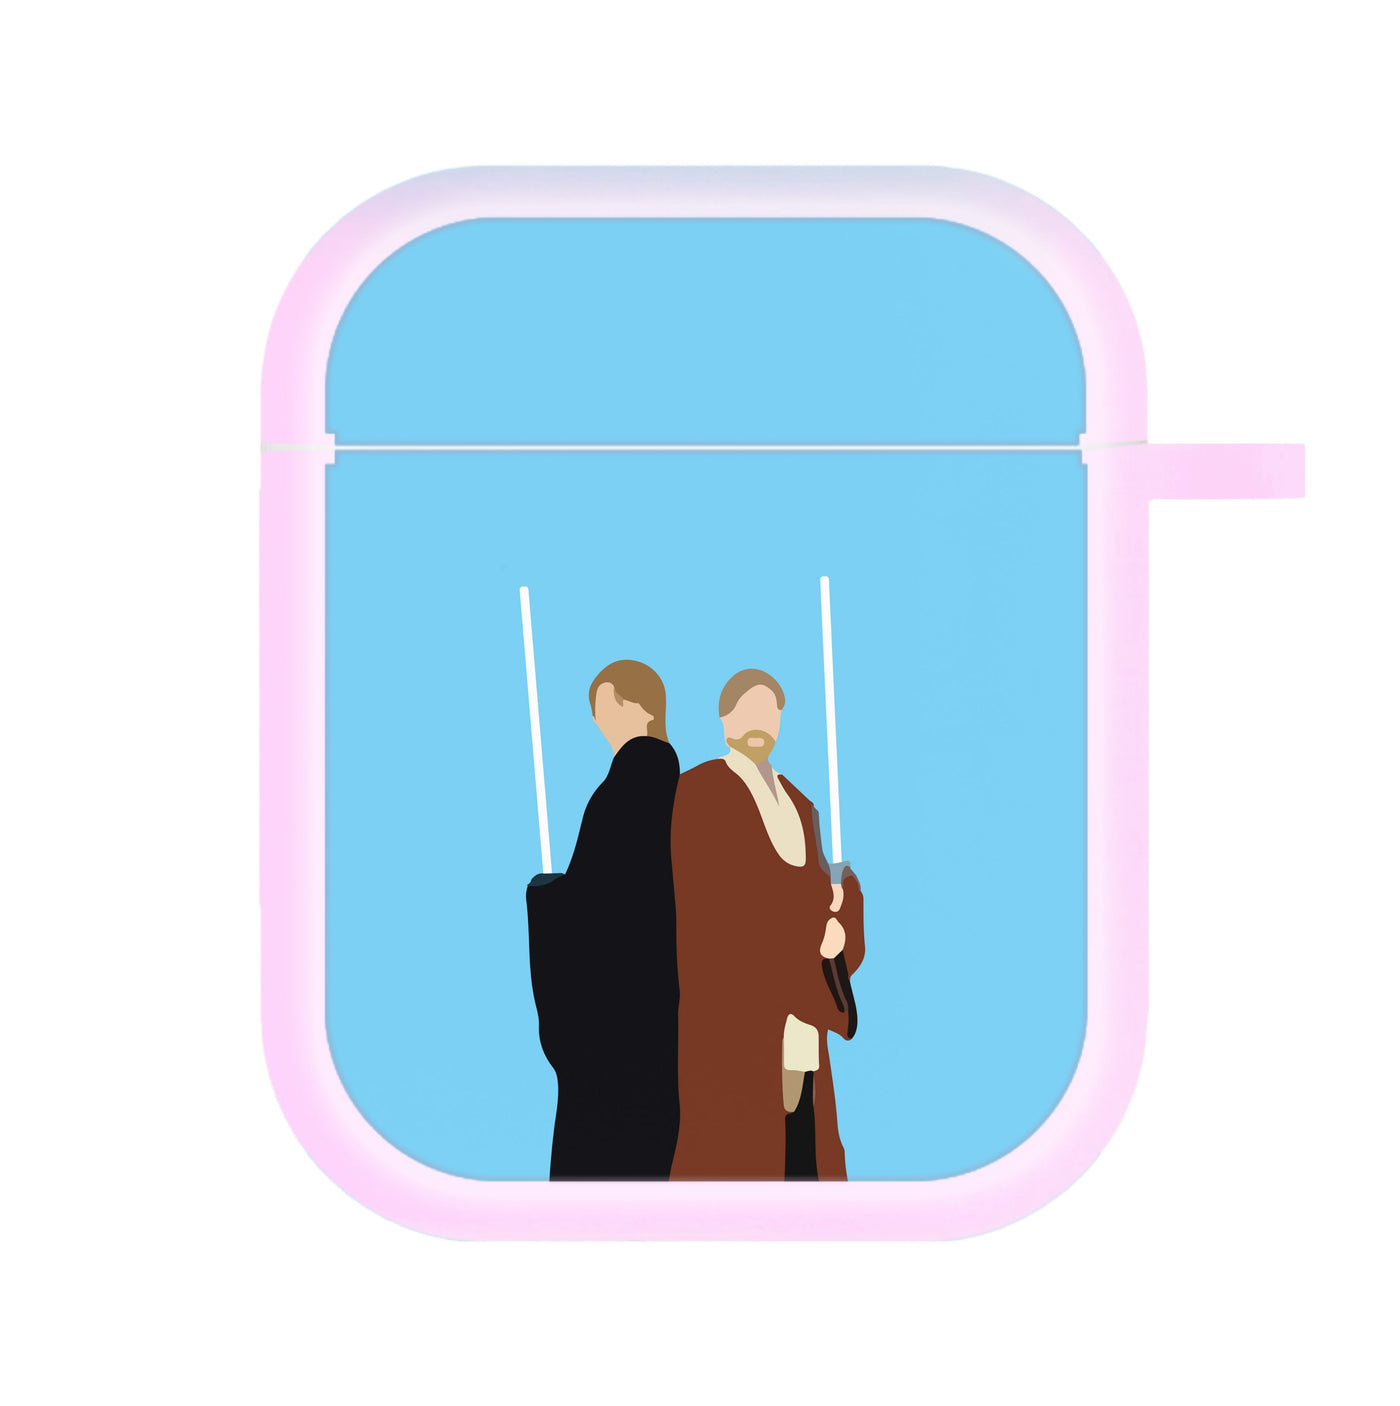 Luke Skywalker And Obi-Wan Kenobi - Star Wars AirPods Case